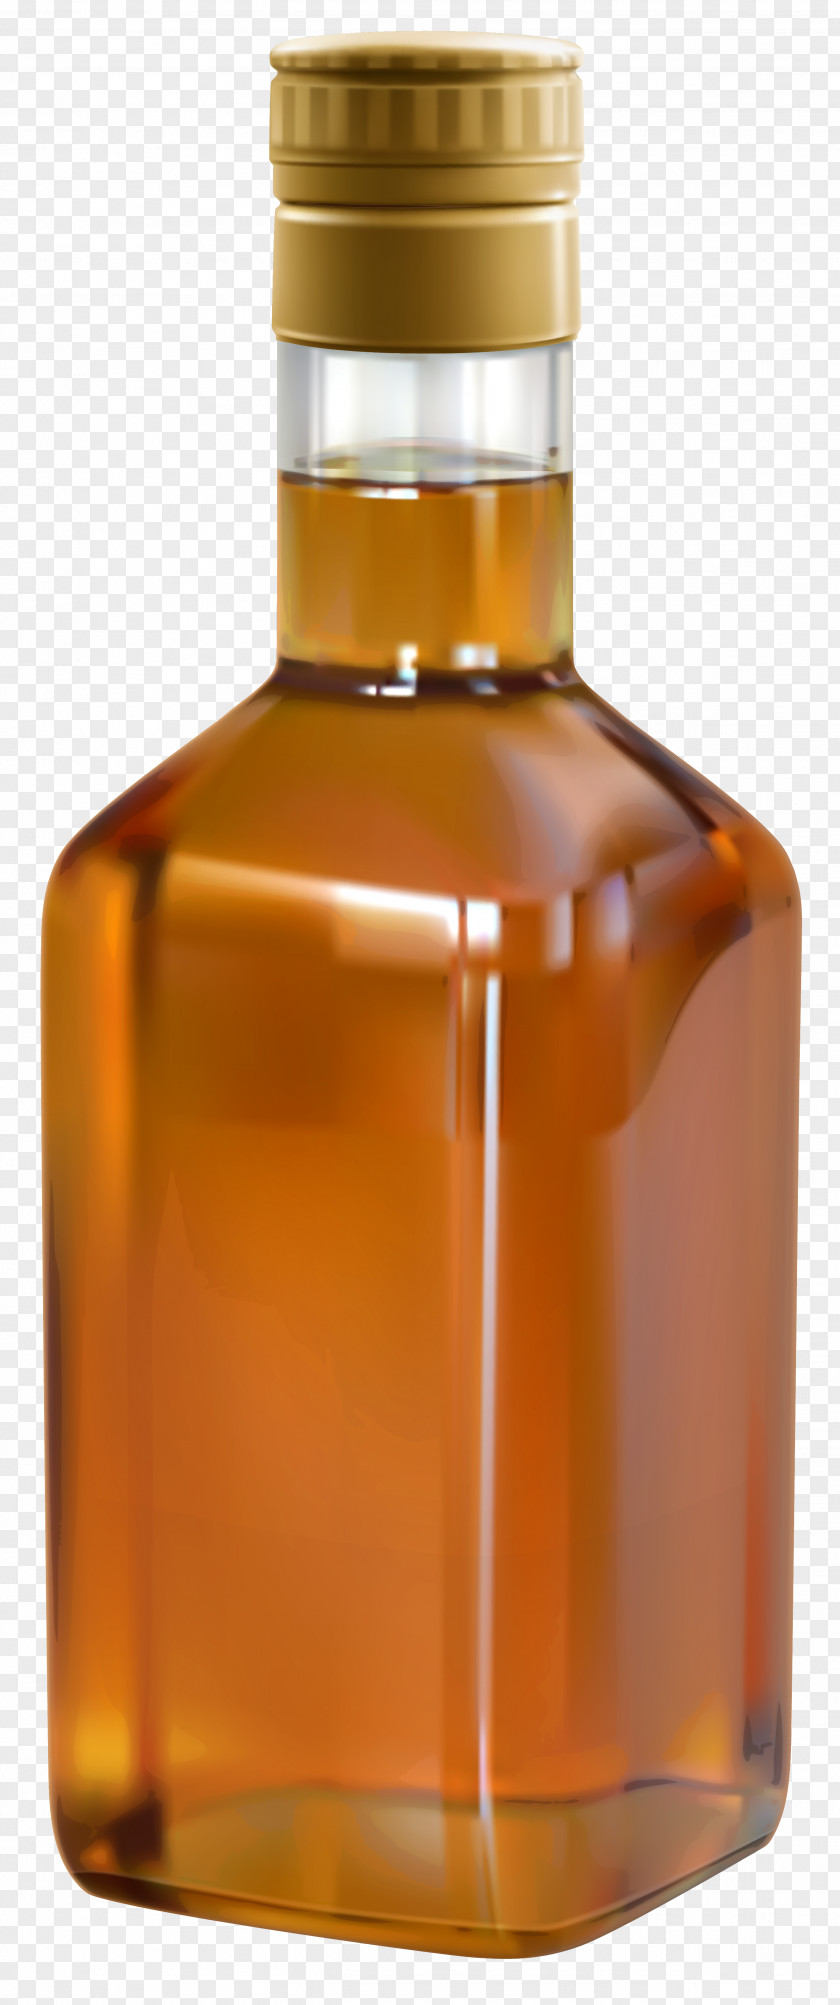 Whiskey Bottle Clip Art Image Scotch Whisky Distilled Beverage Irish Rum PNG